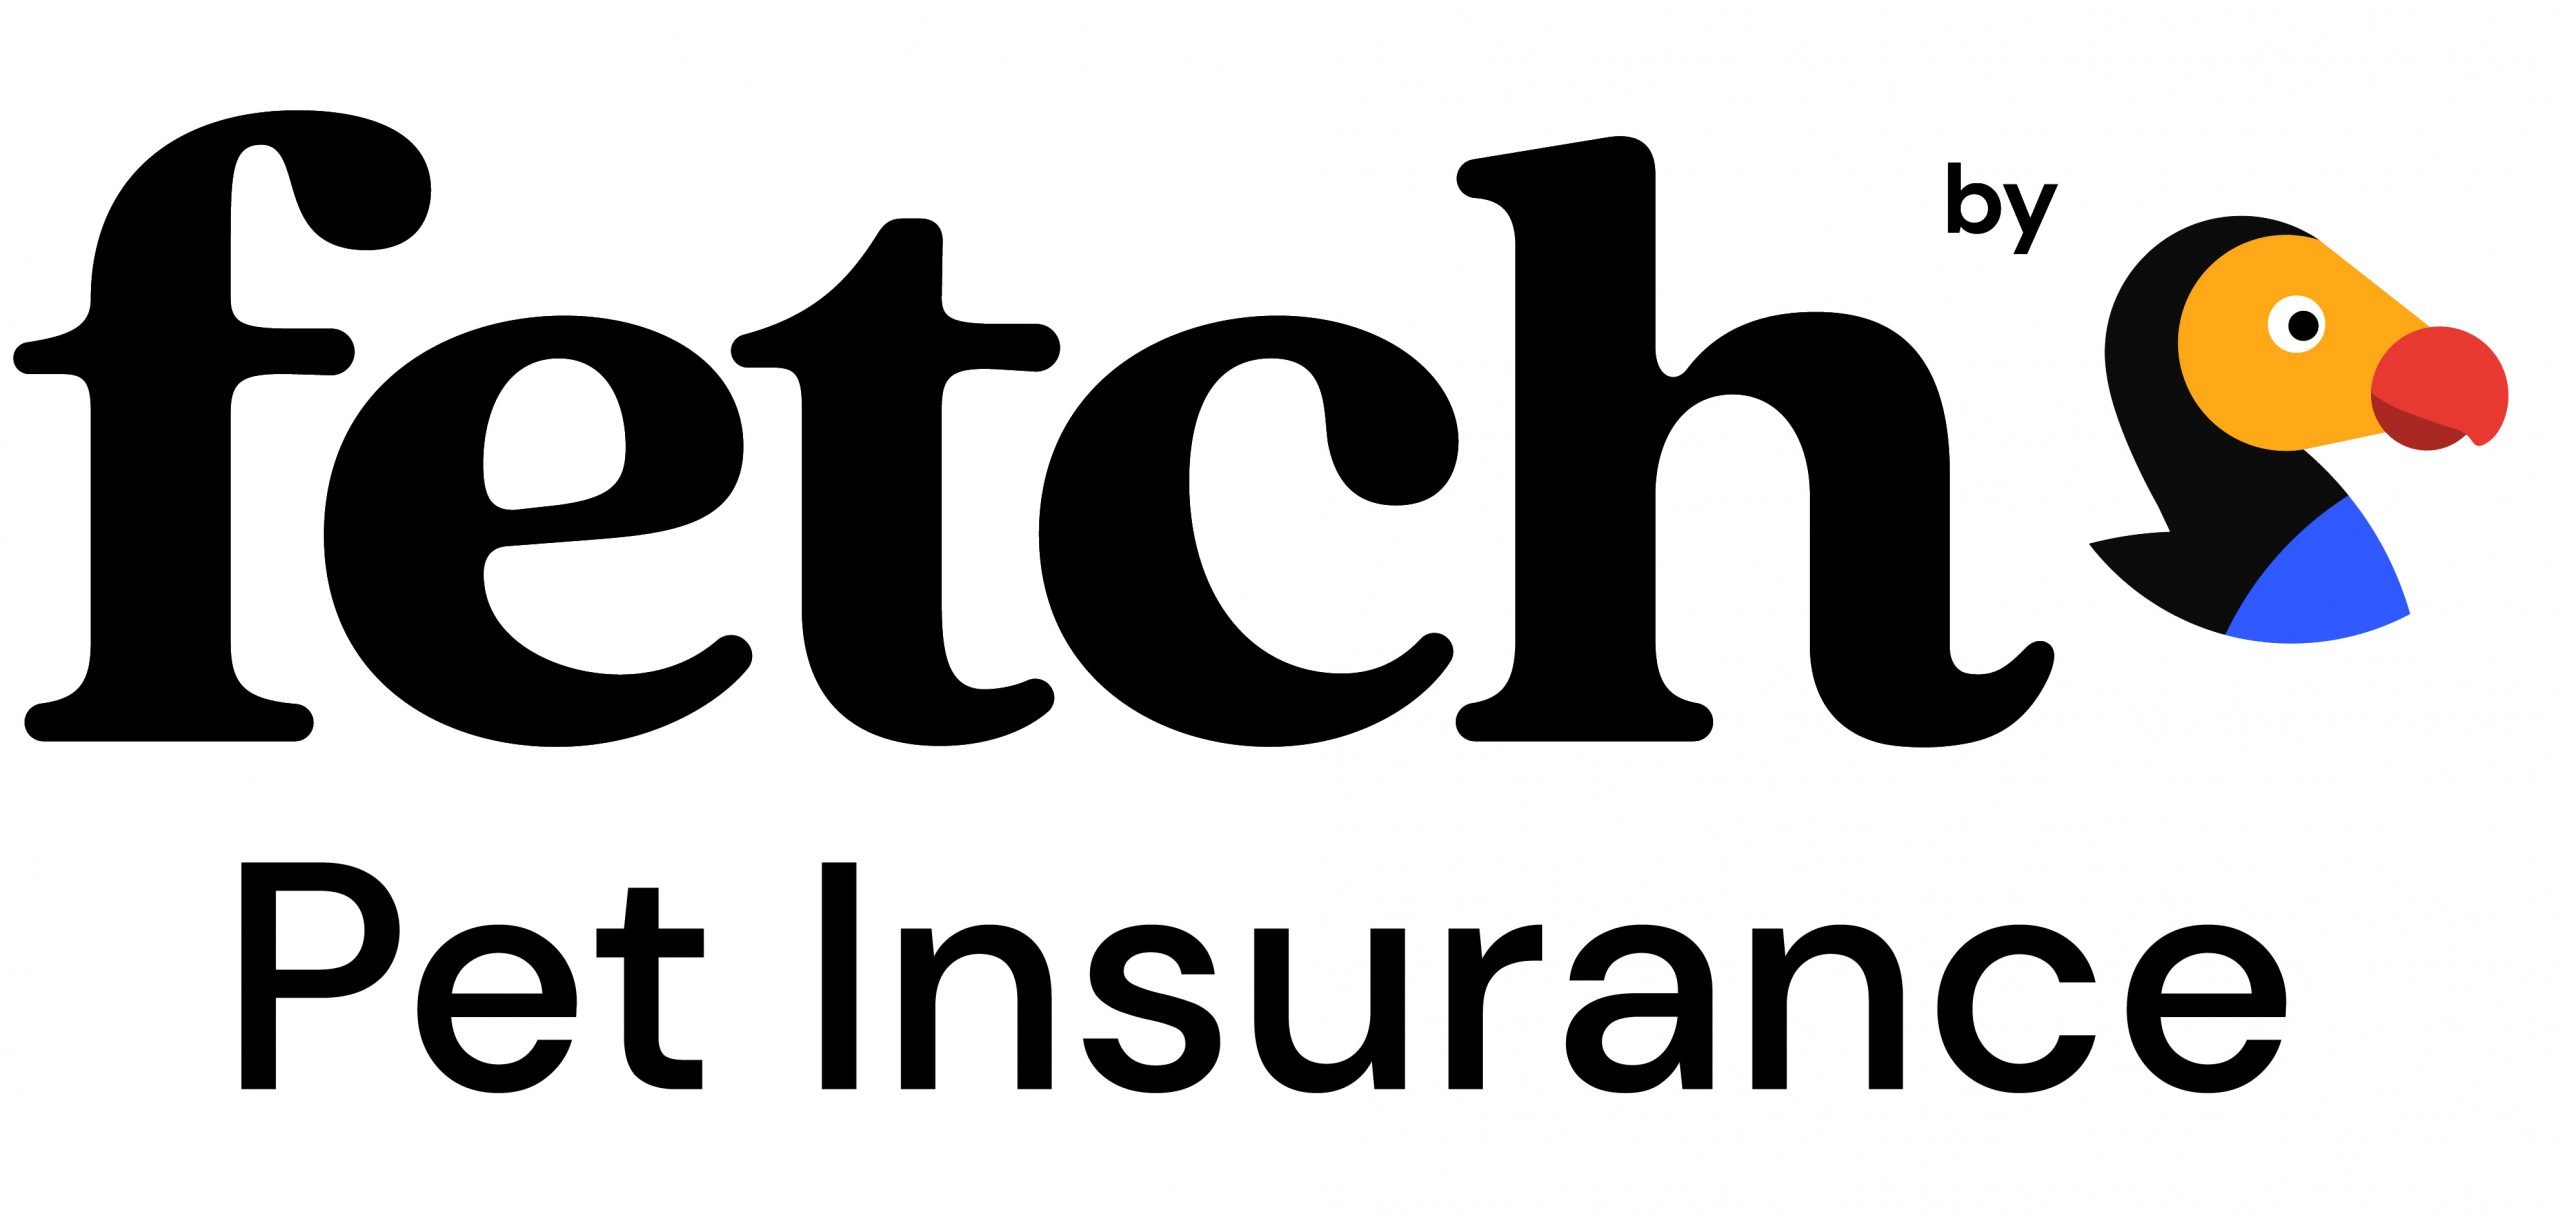 Pet Insurance_Centered_Fetch_Small_Logo (1)